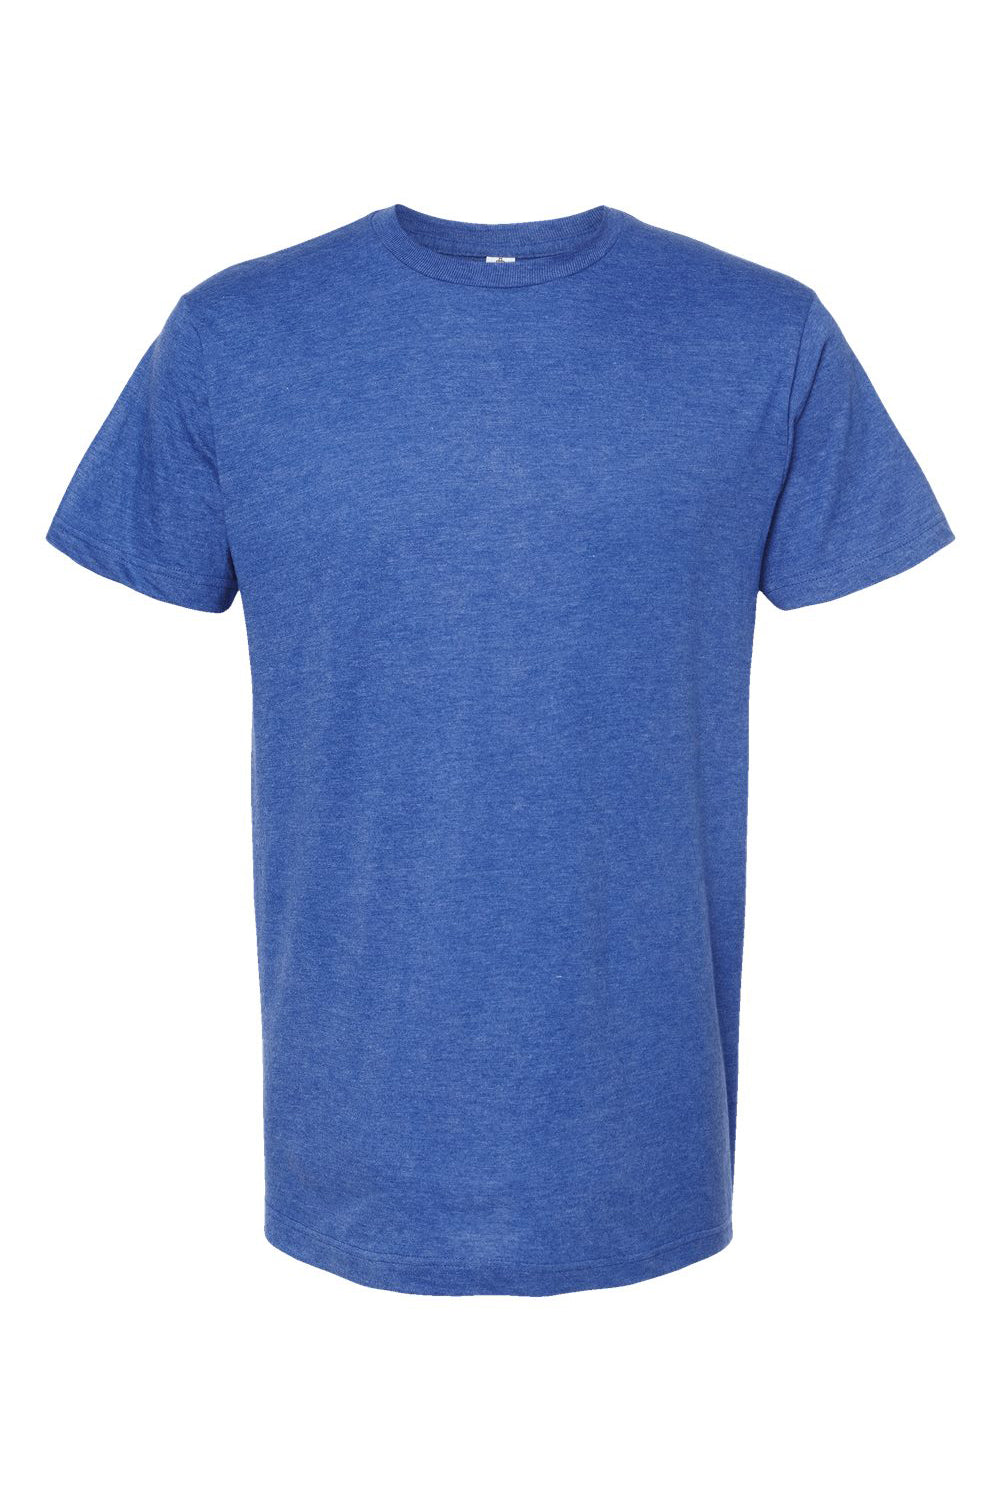 Tultex 202 Mens Fine Jersey Short Sleeve Crewneck T-Shirt Heather Royal Blue Flat Front